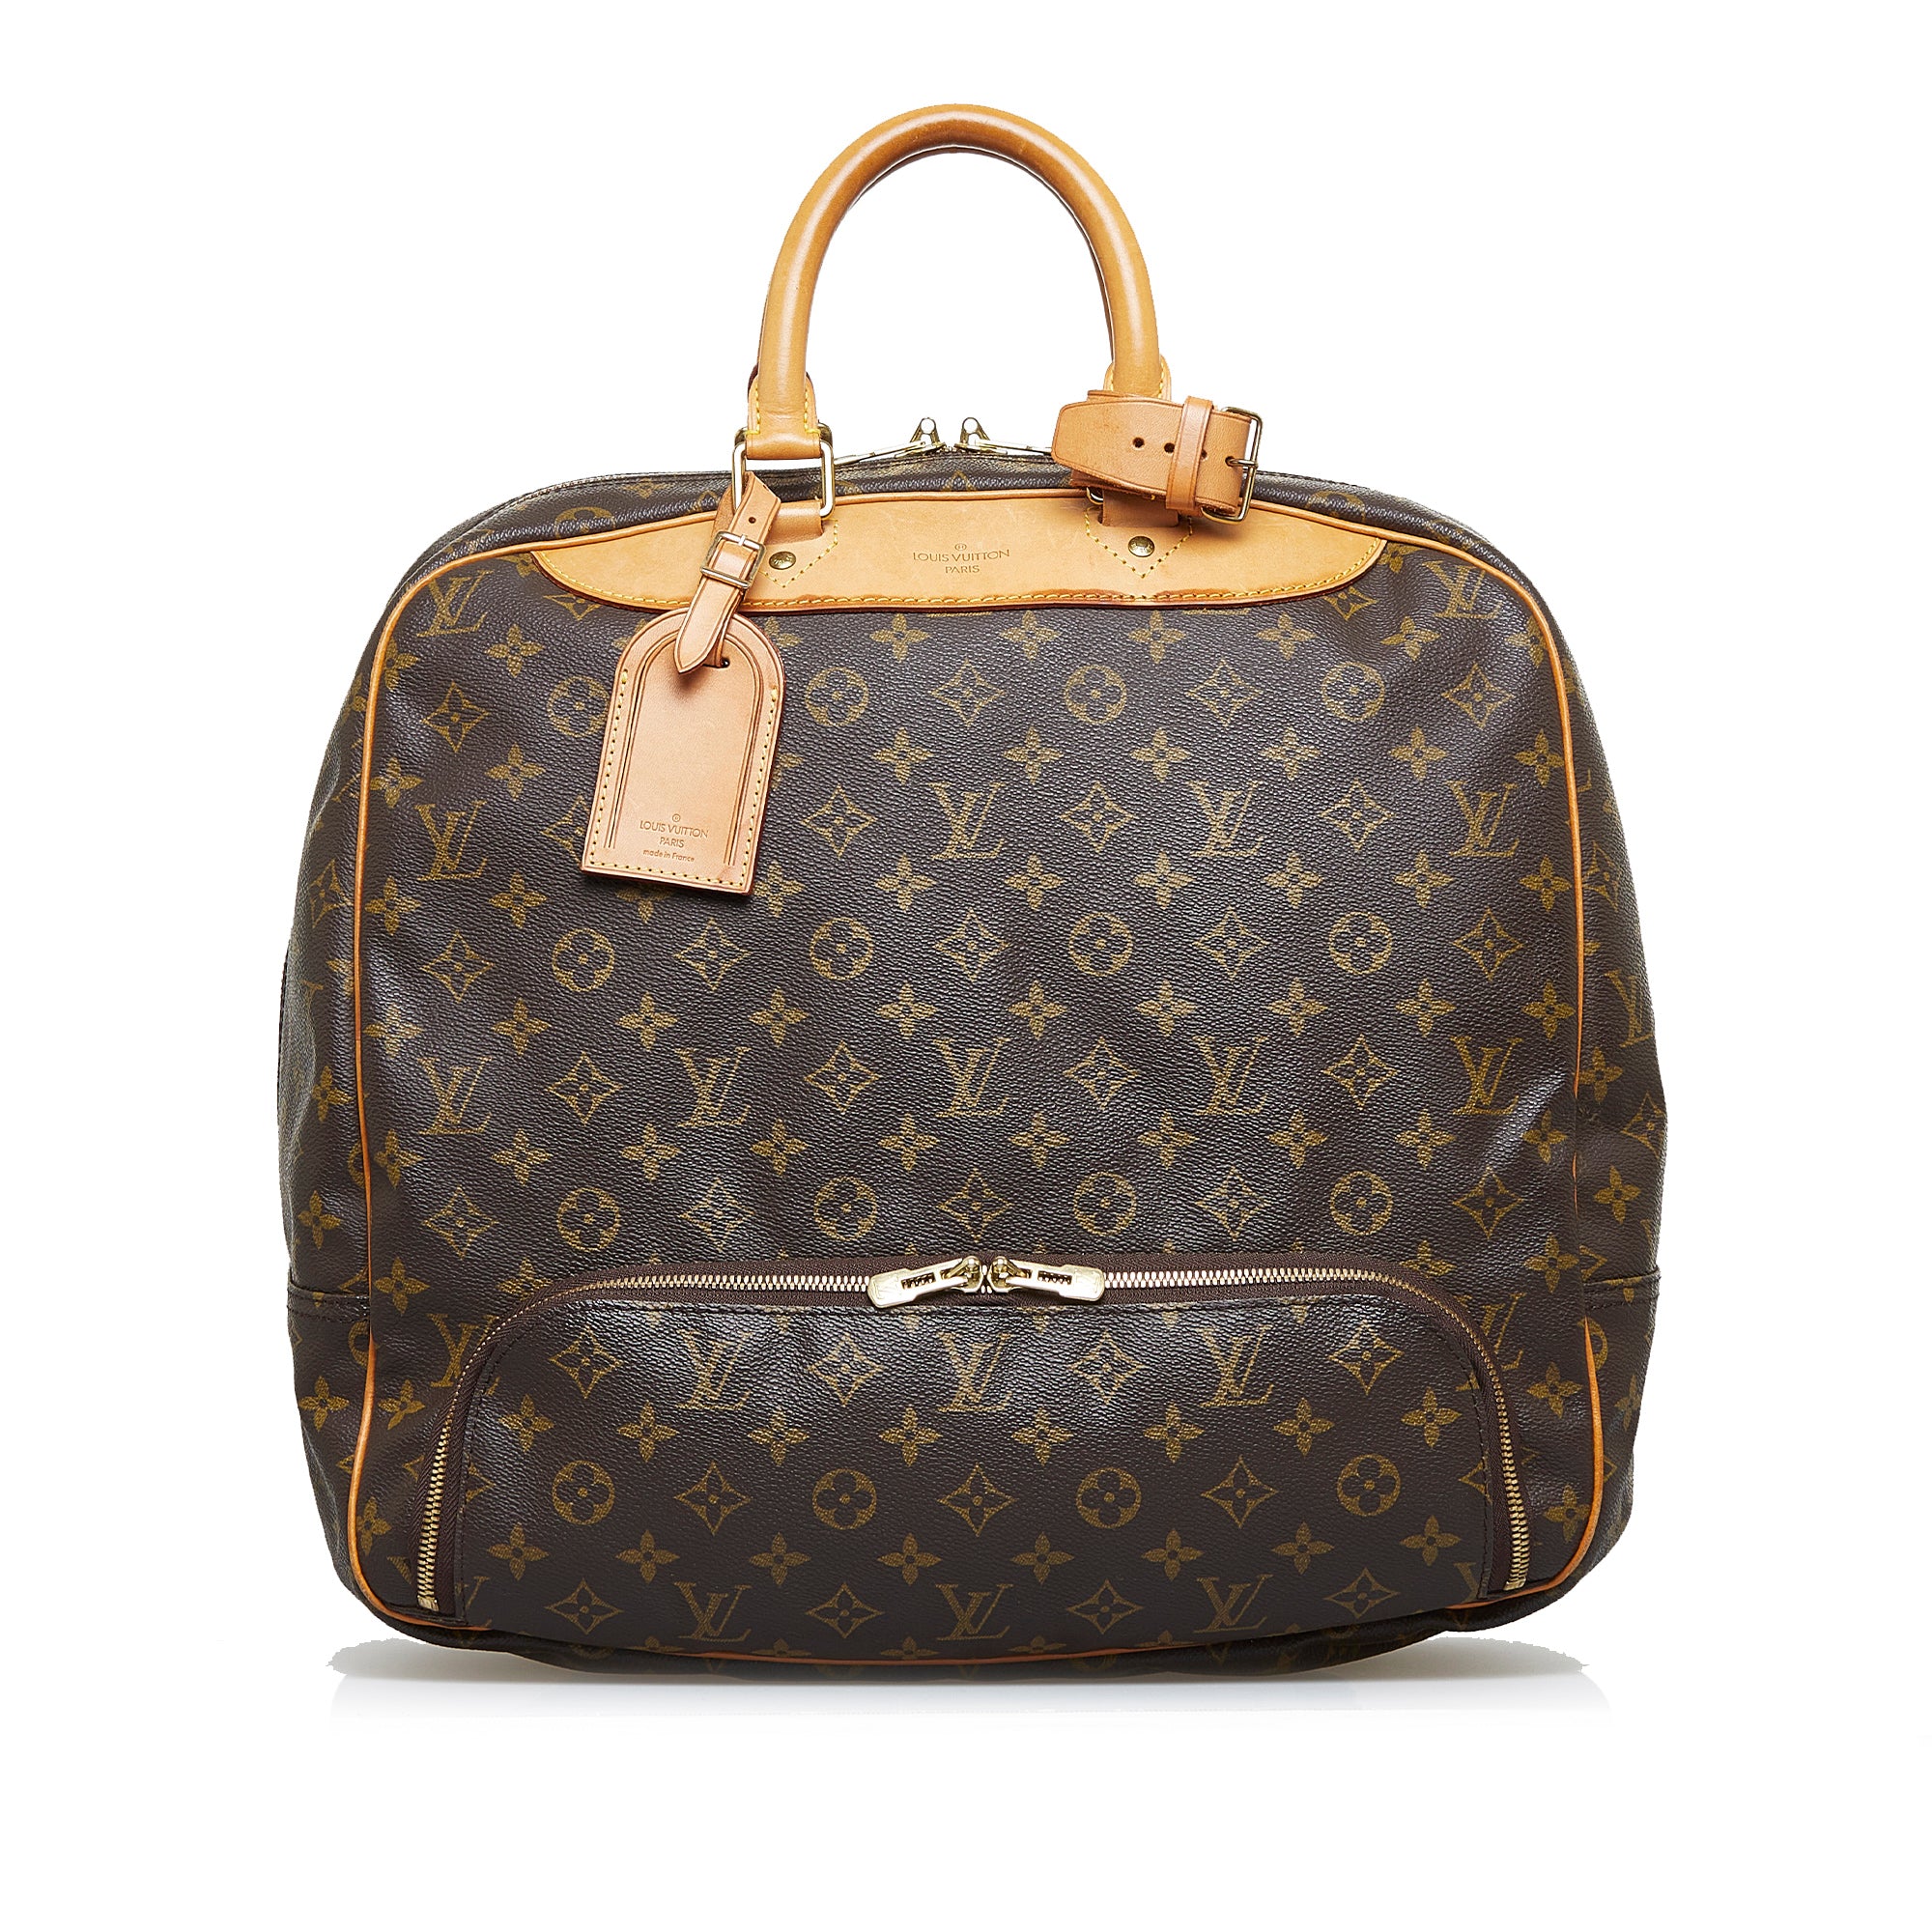 Louis Vuitton - Authenticated Deauville Handbag - Cloth Beige for Women, Good Condition